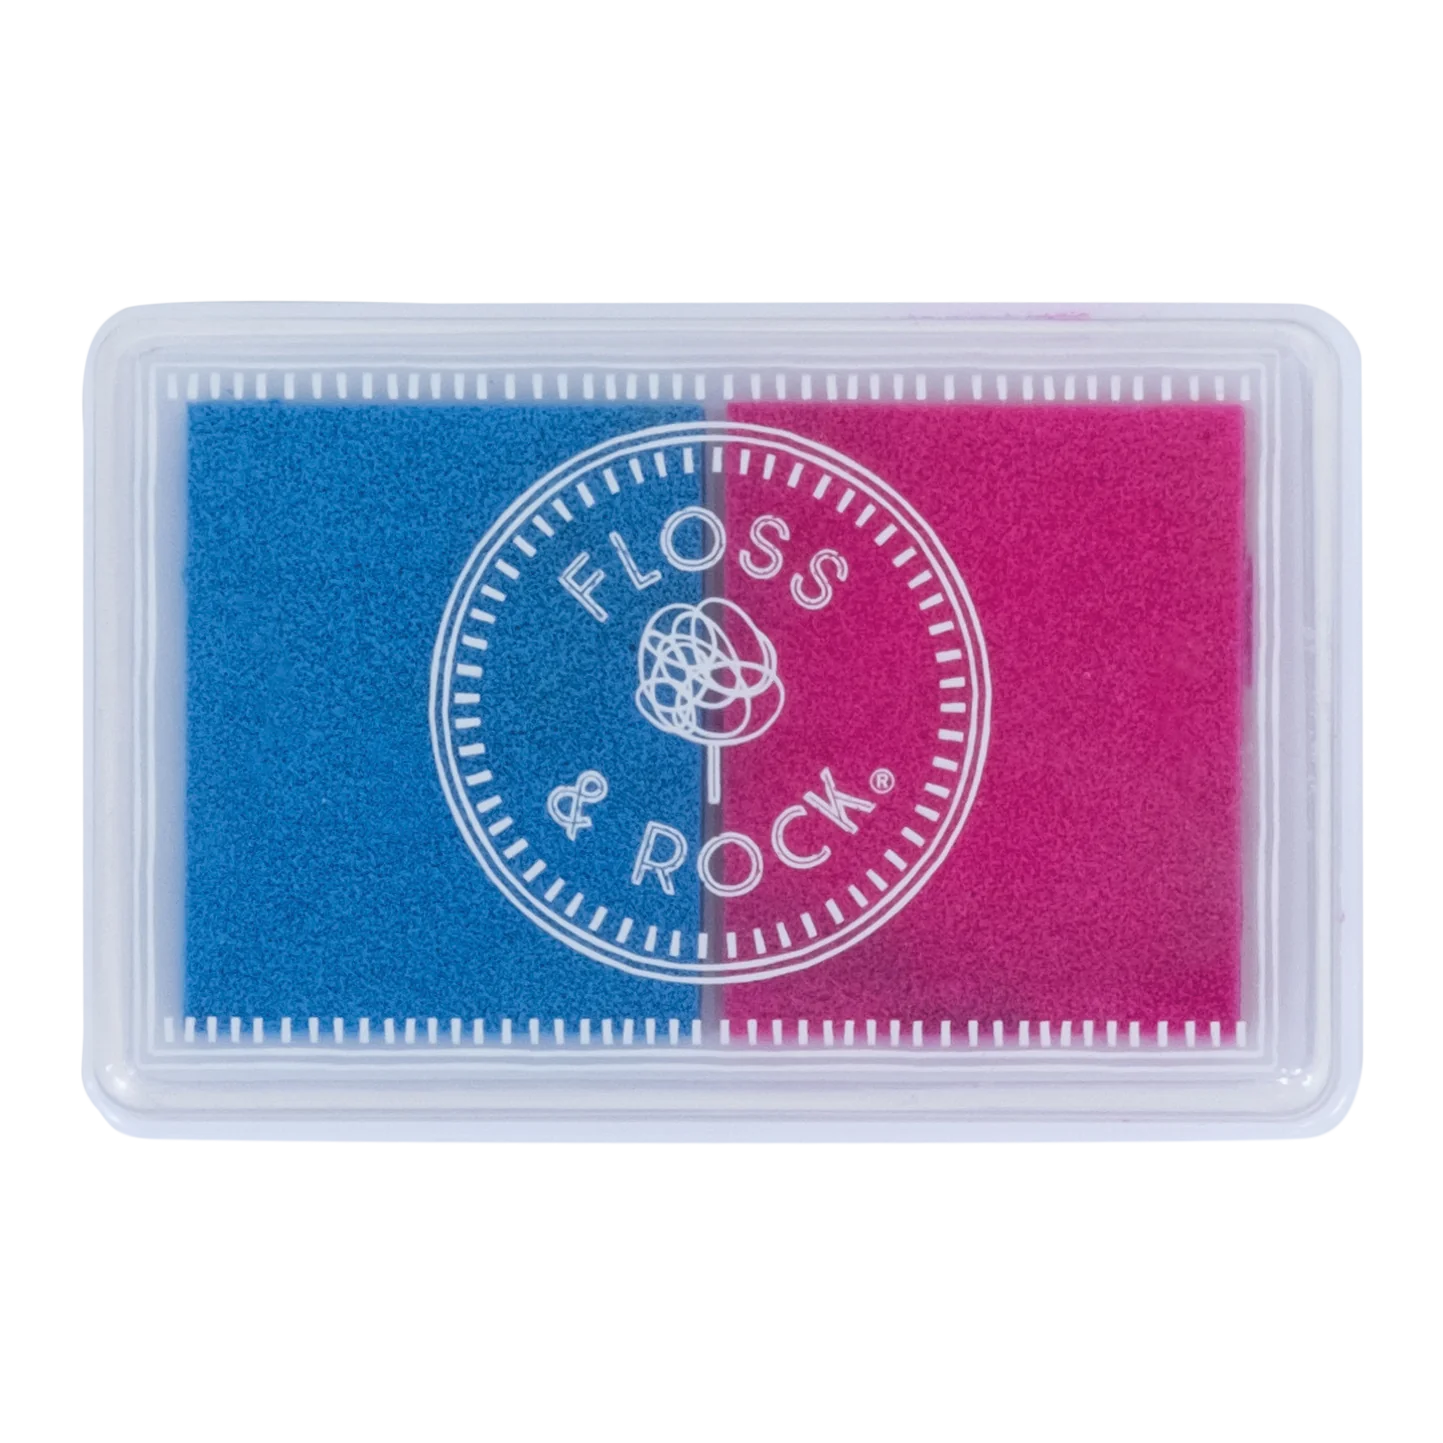 Floss & Rock My Stamp Set – Rainbow Fairy